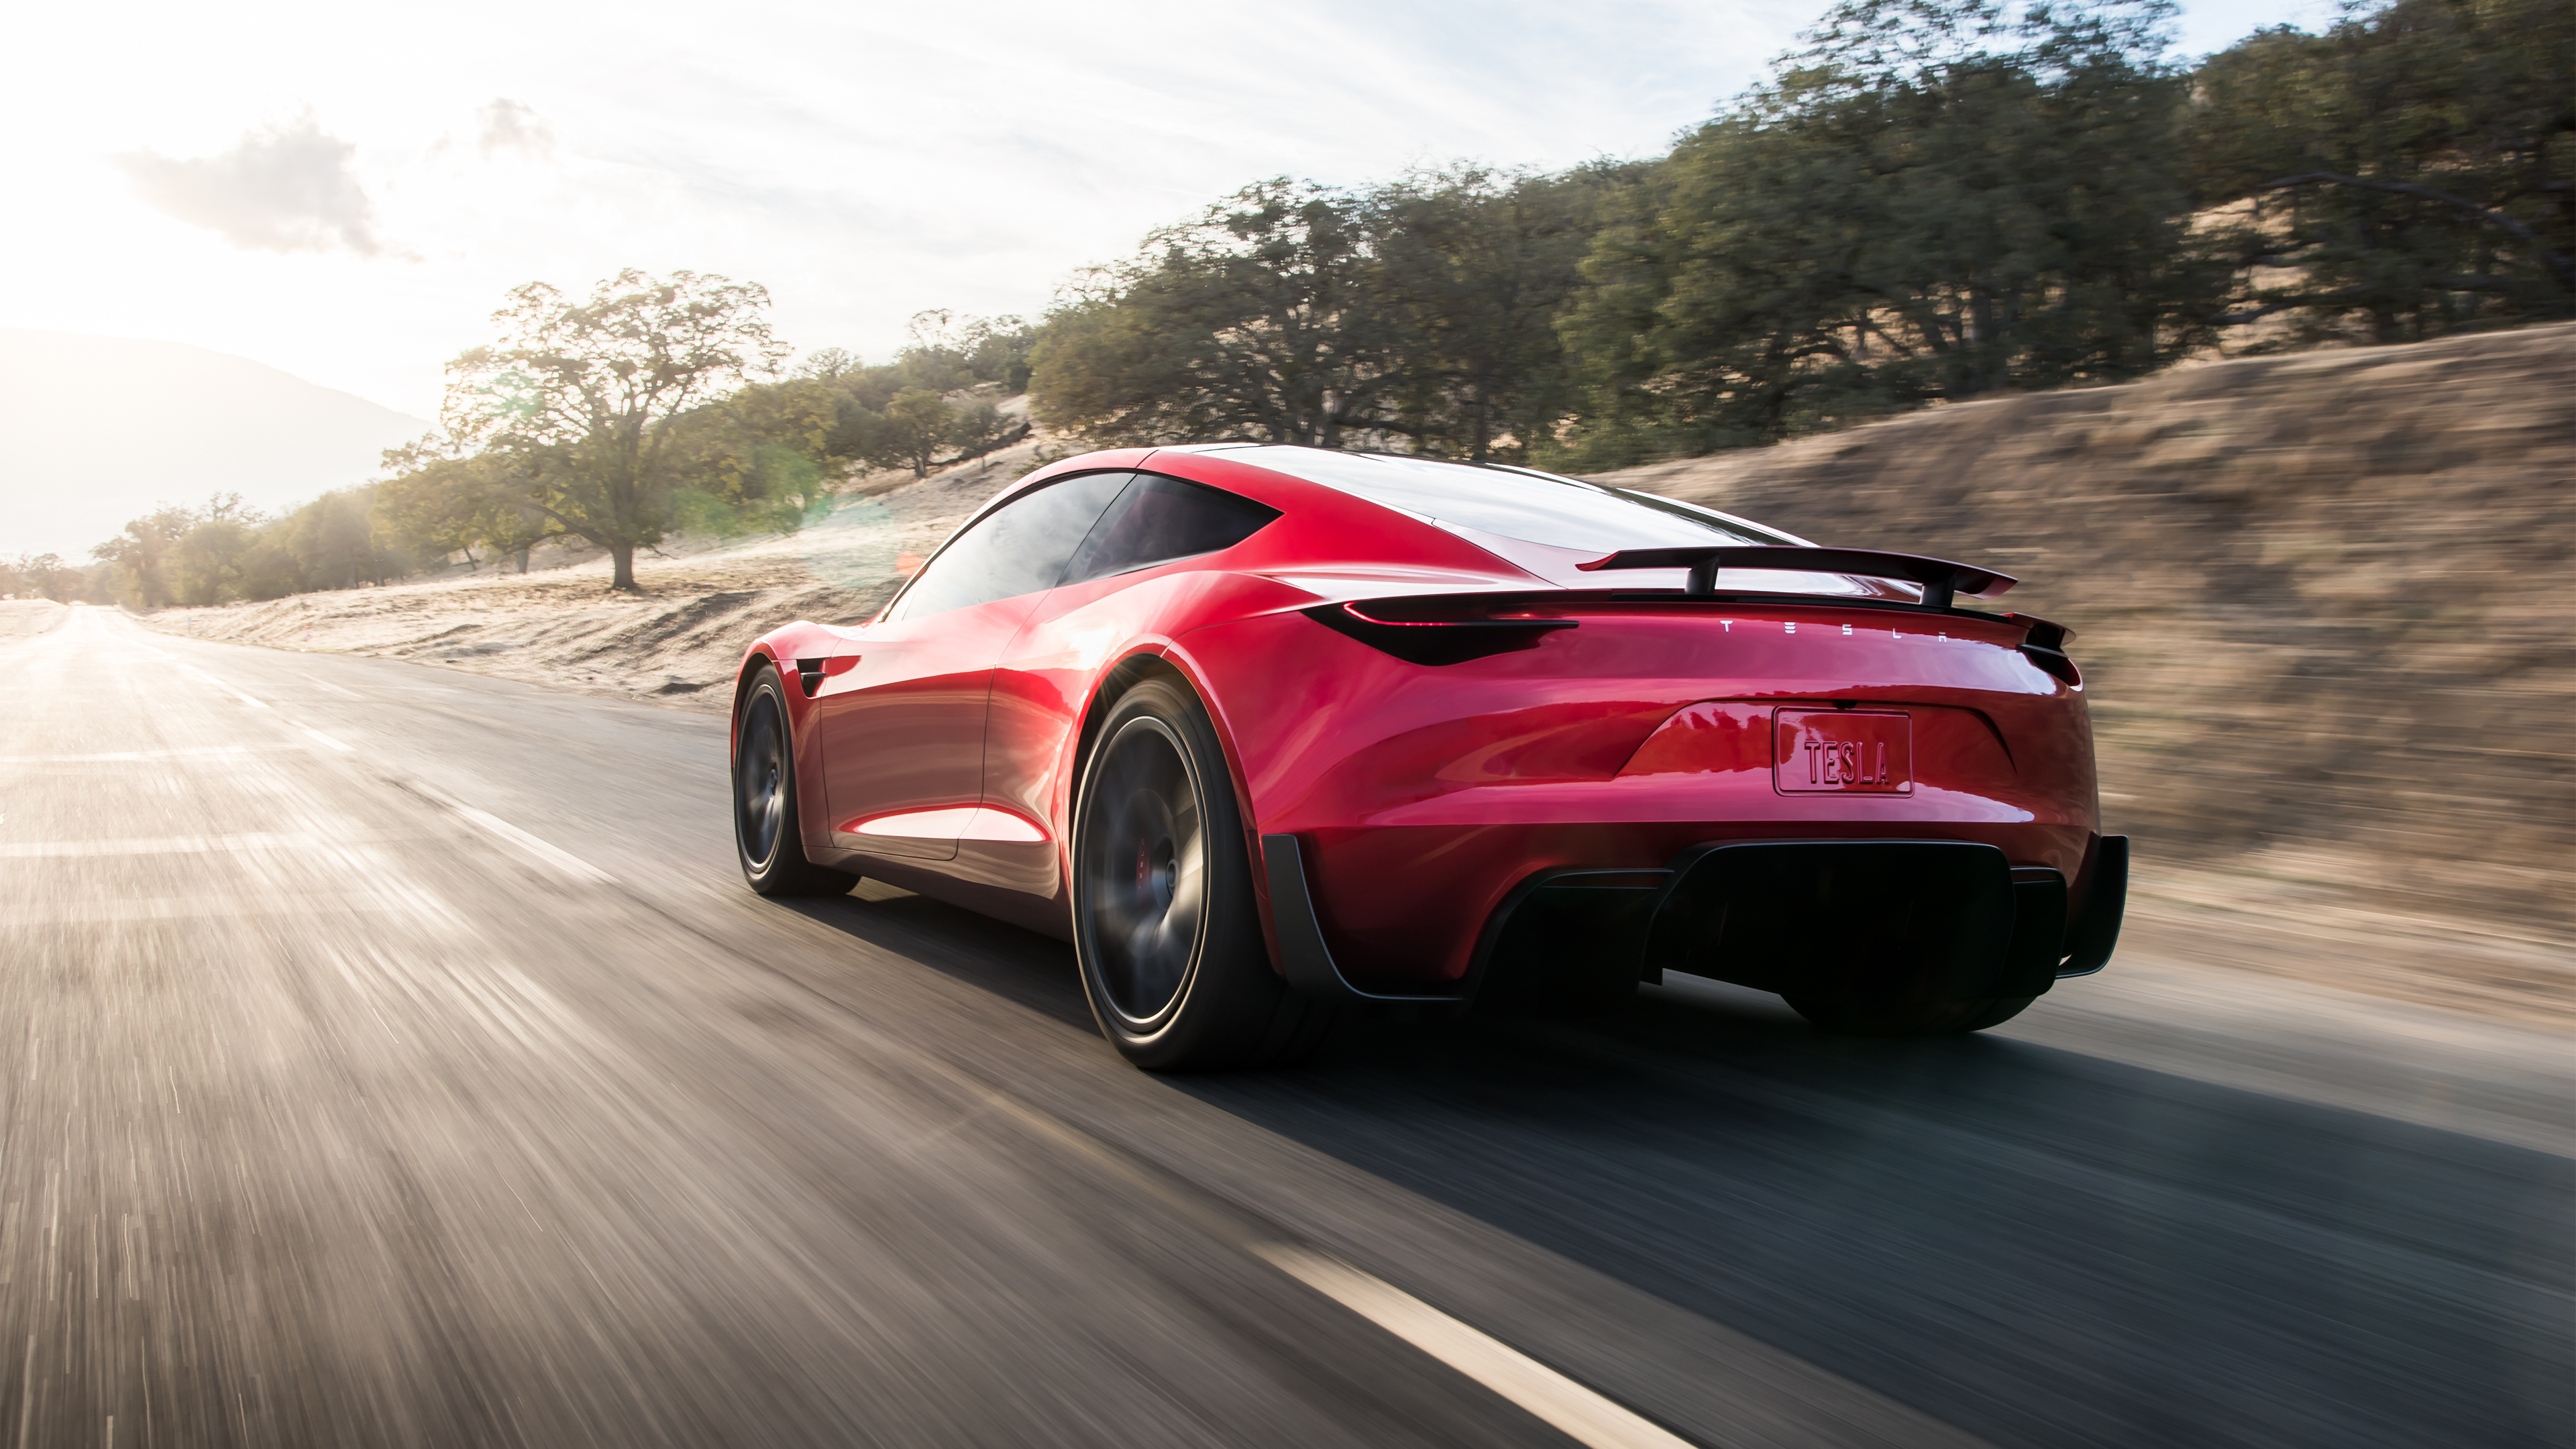 Tesla devrait livrer ses Roadster en 2023, selon les dires d'Elon Musk